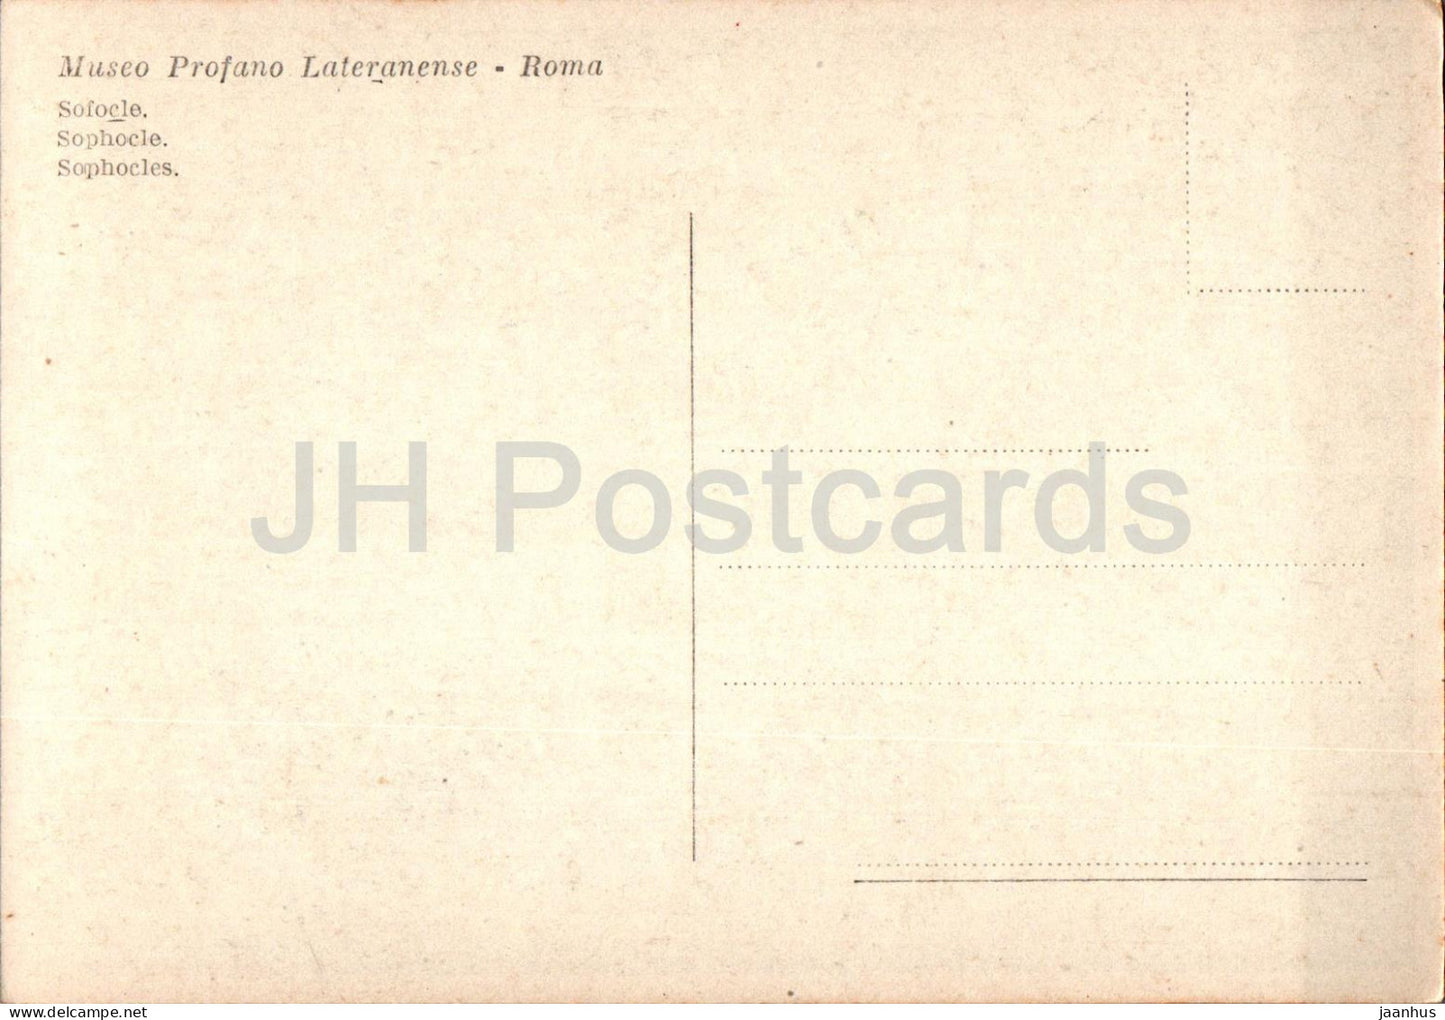 Roma - Museo Profano Lateranense - Sofokles - Sophokles - Skulptur - alte Postkarte - Italien - unbenutzt 